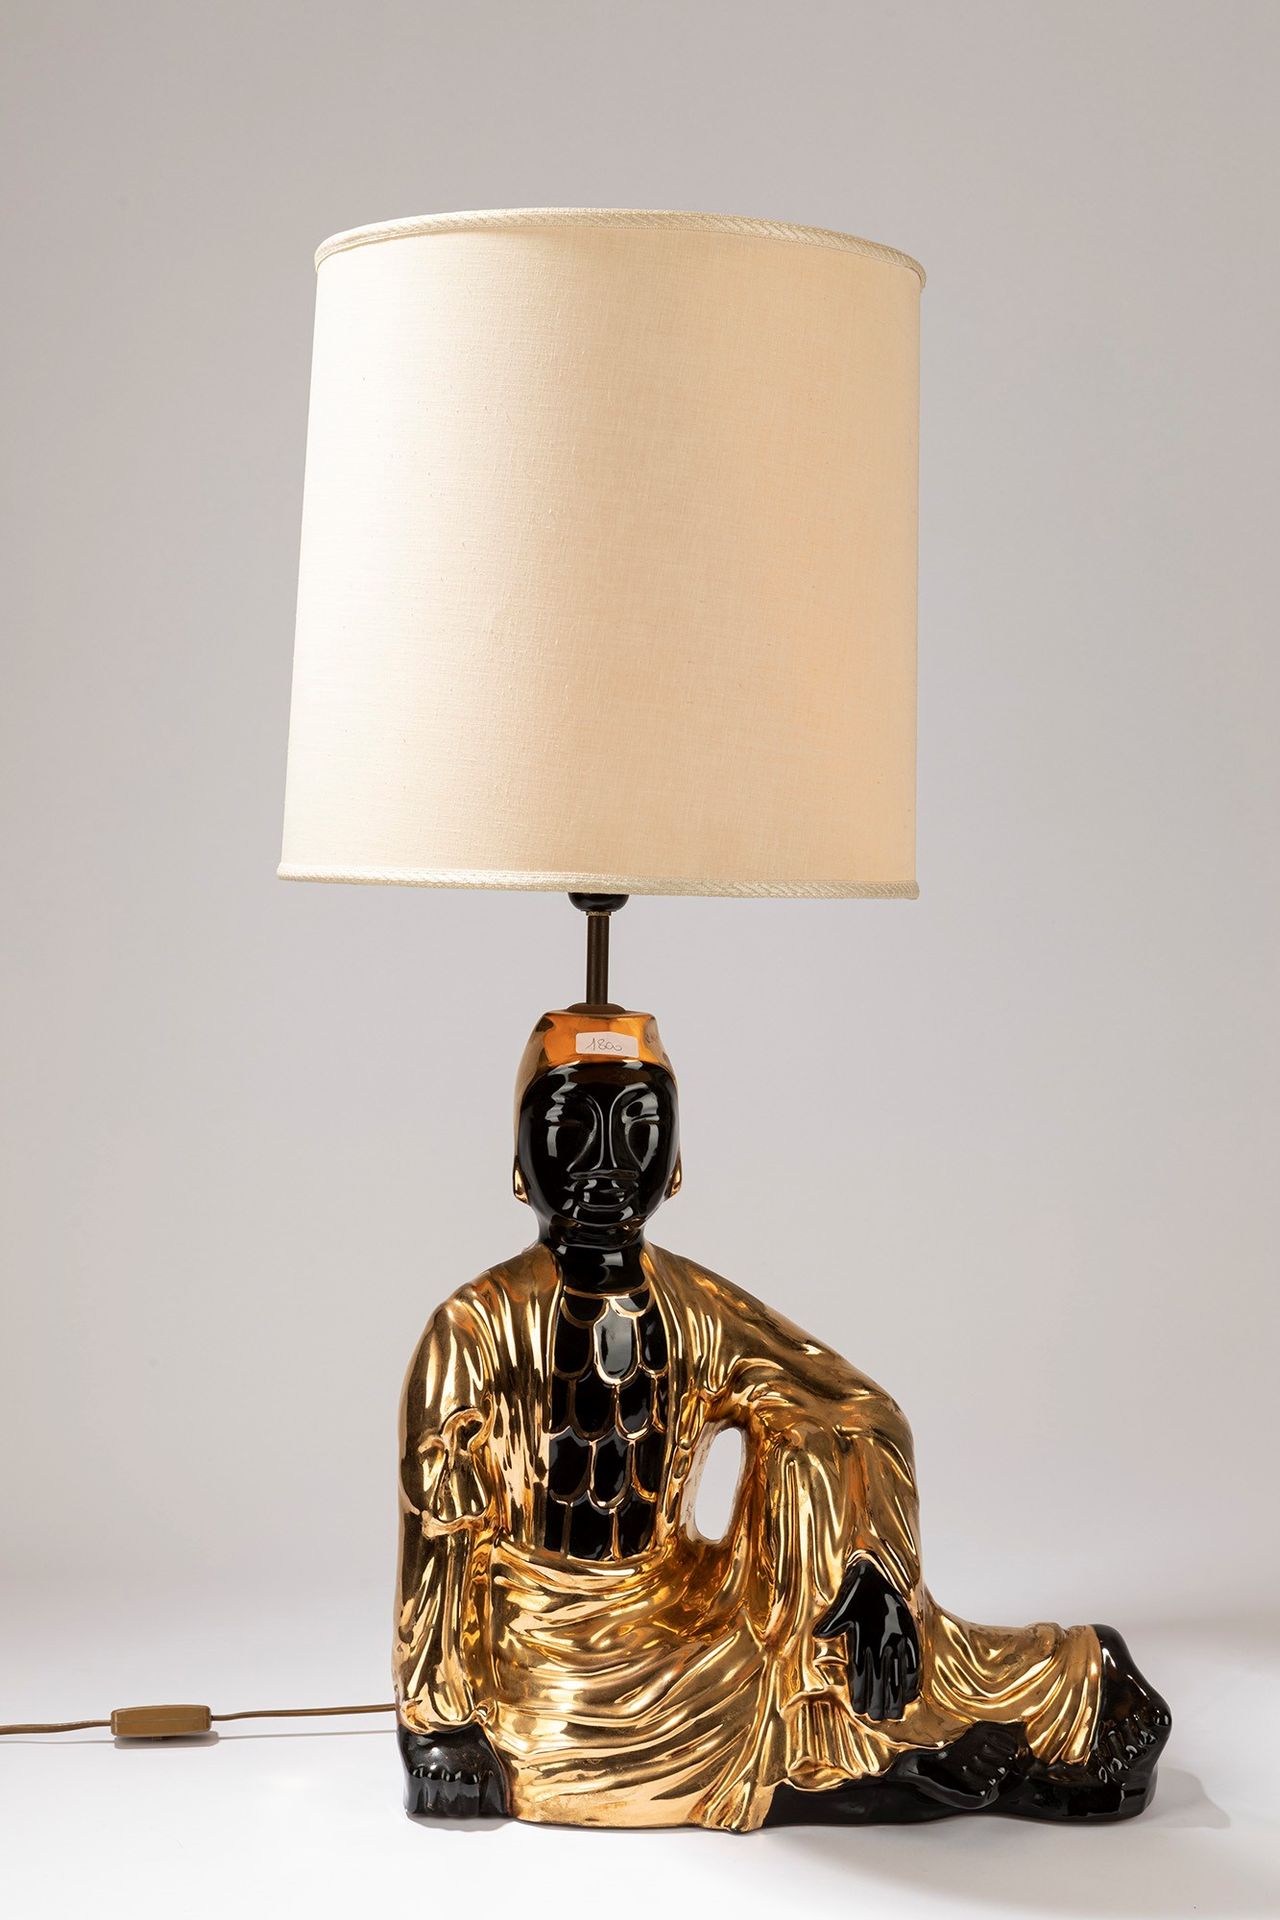 ITALIAN MANUFACTURE 台灯，70年代

直径46厘米，高84厘米
金色和黑色釉面陶瓷。